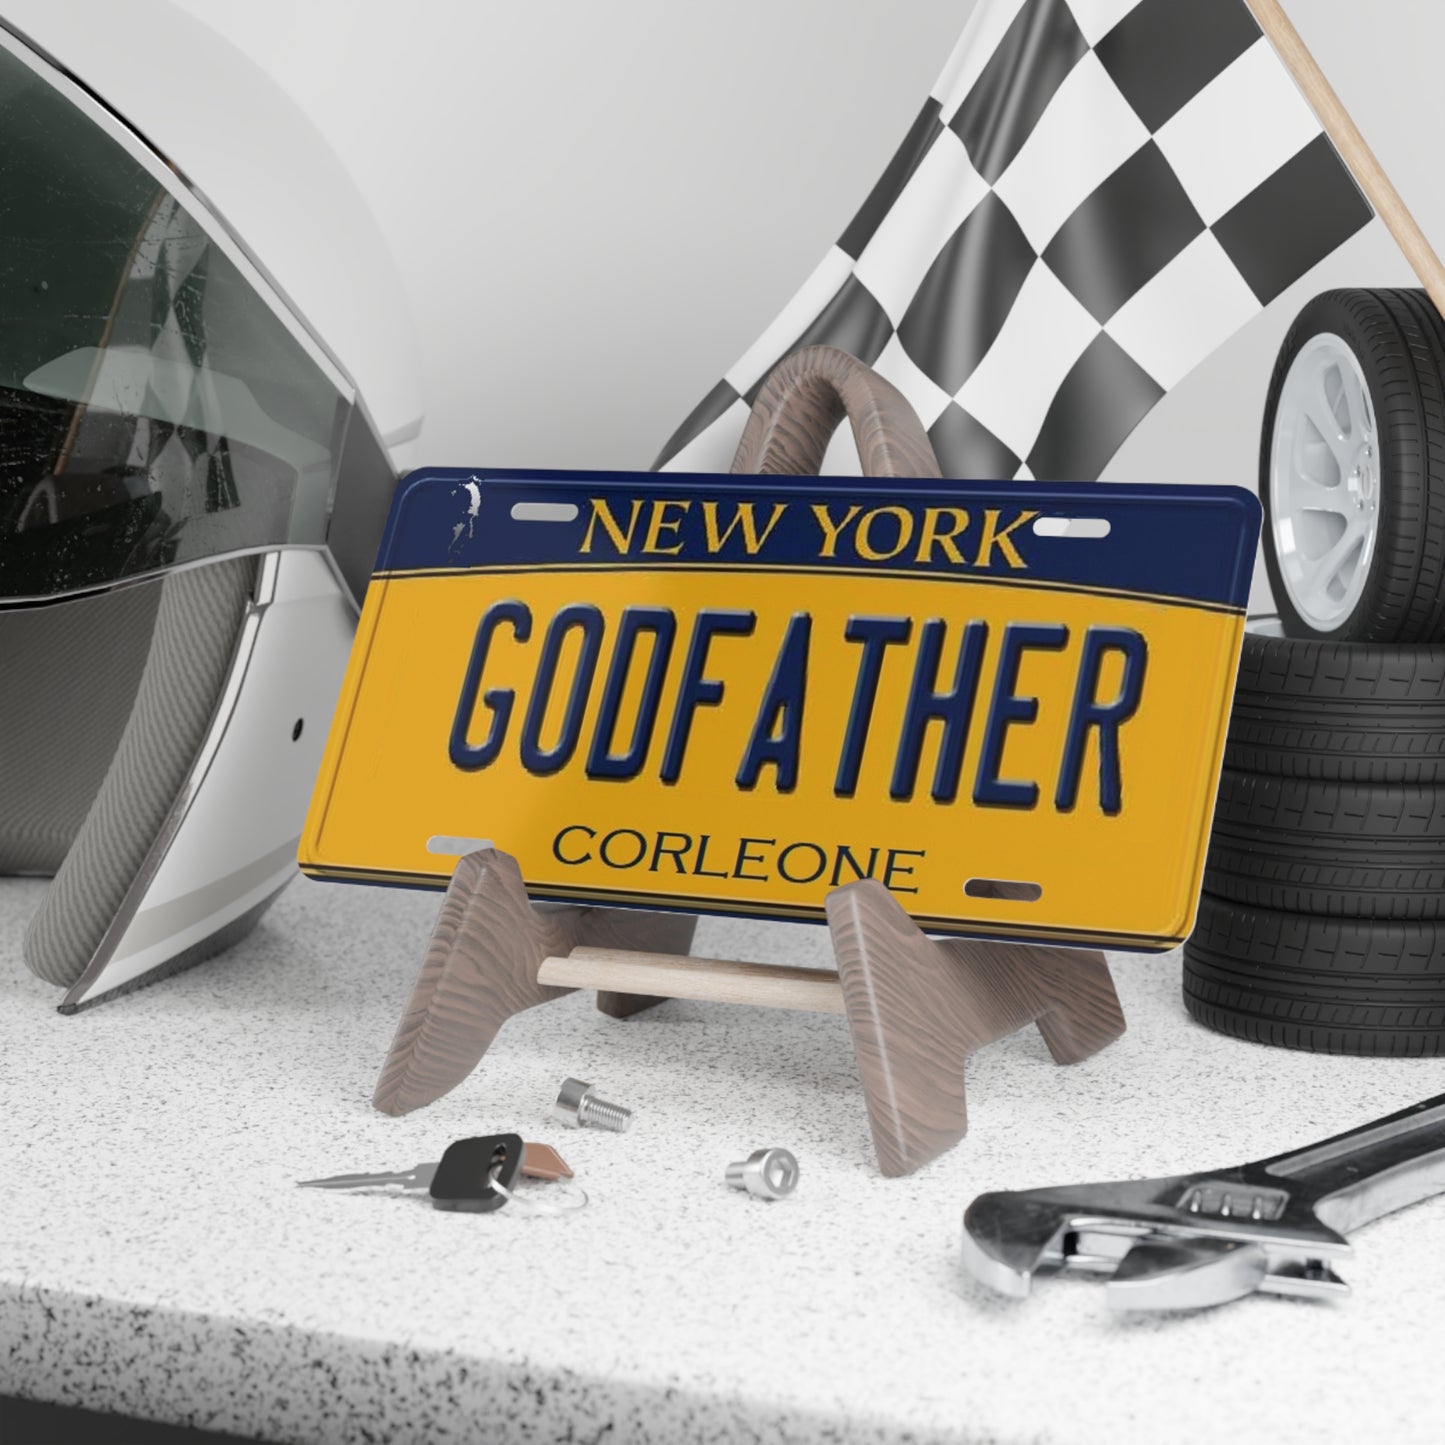 Godfather Corleone Vanity License Plate